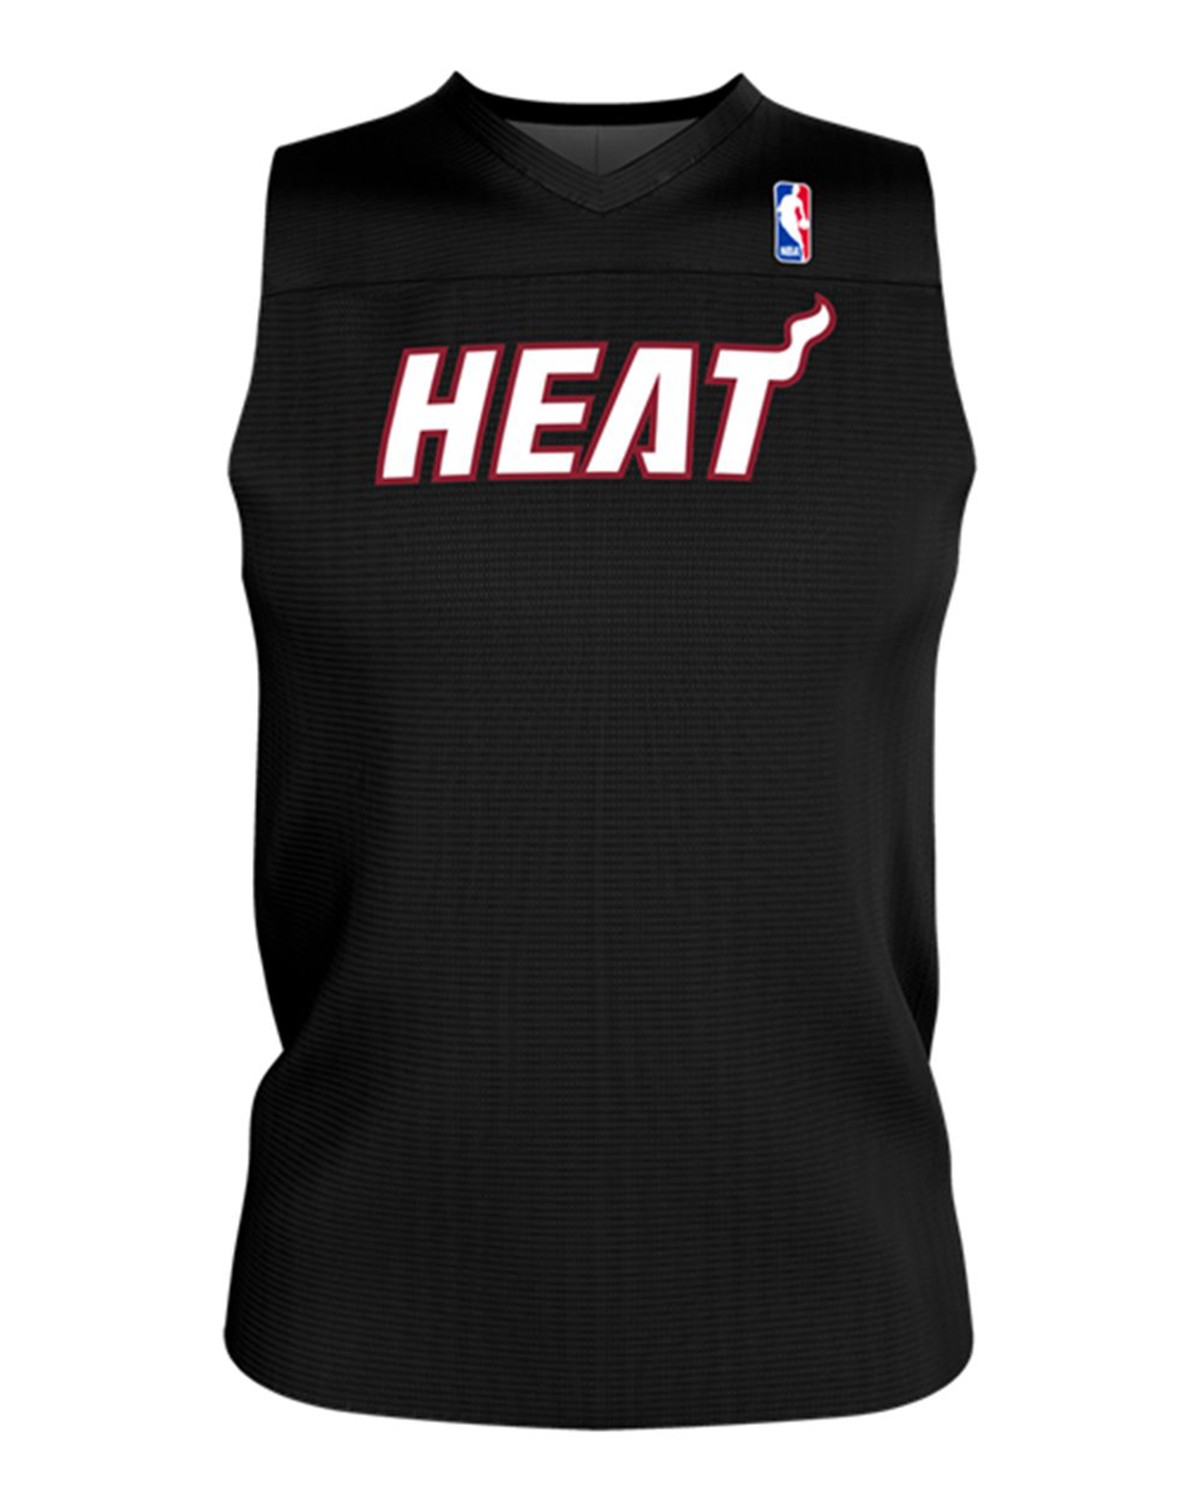 Miami Heat Youth Reversible Basketball Jerseys - A105LY-HEAT